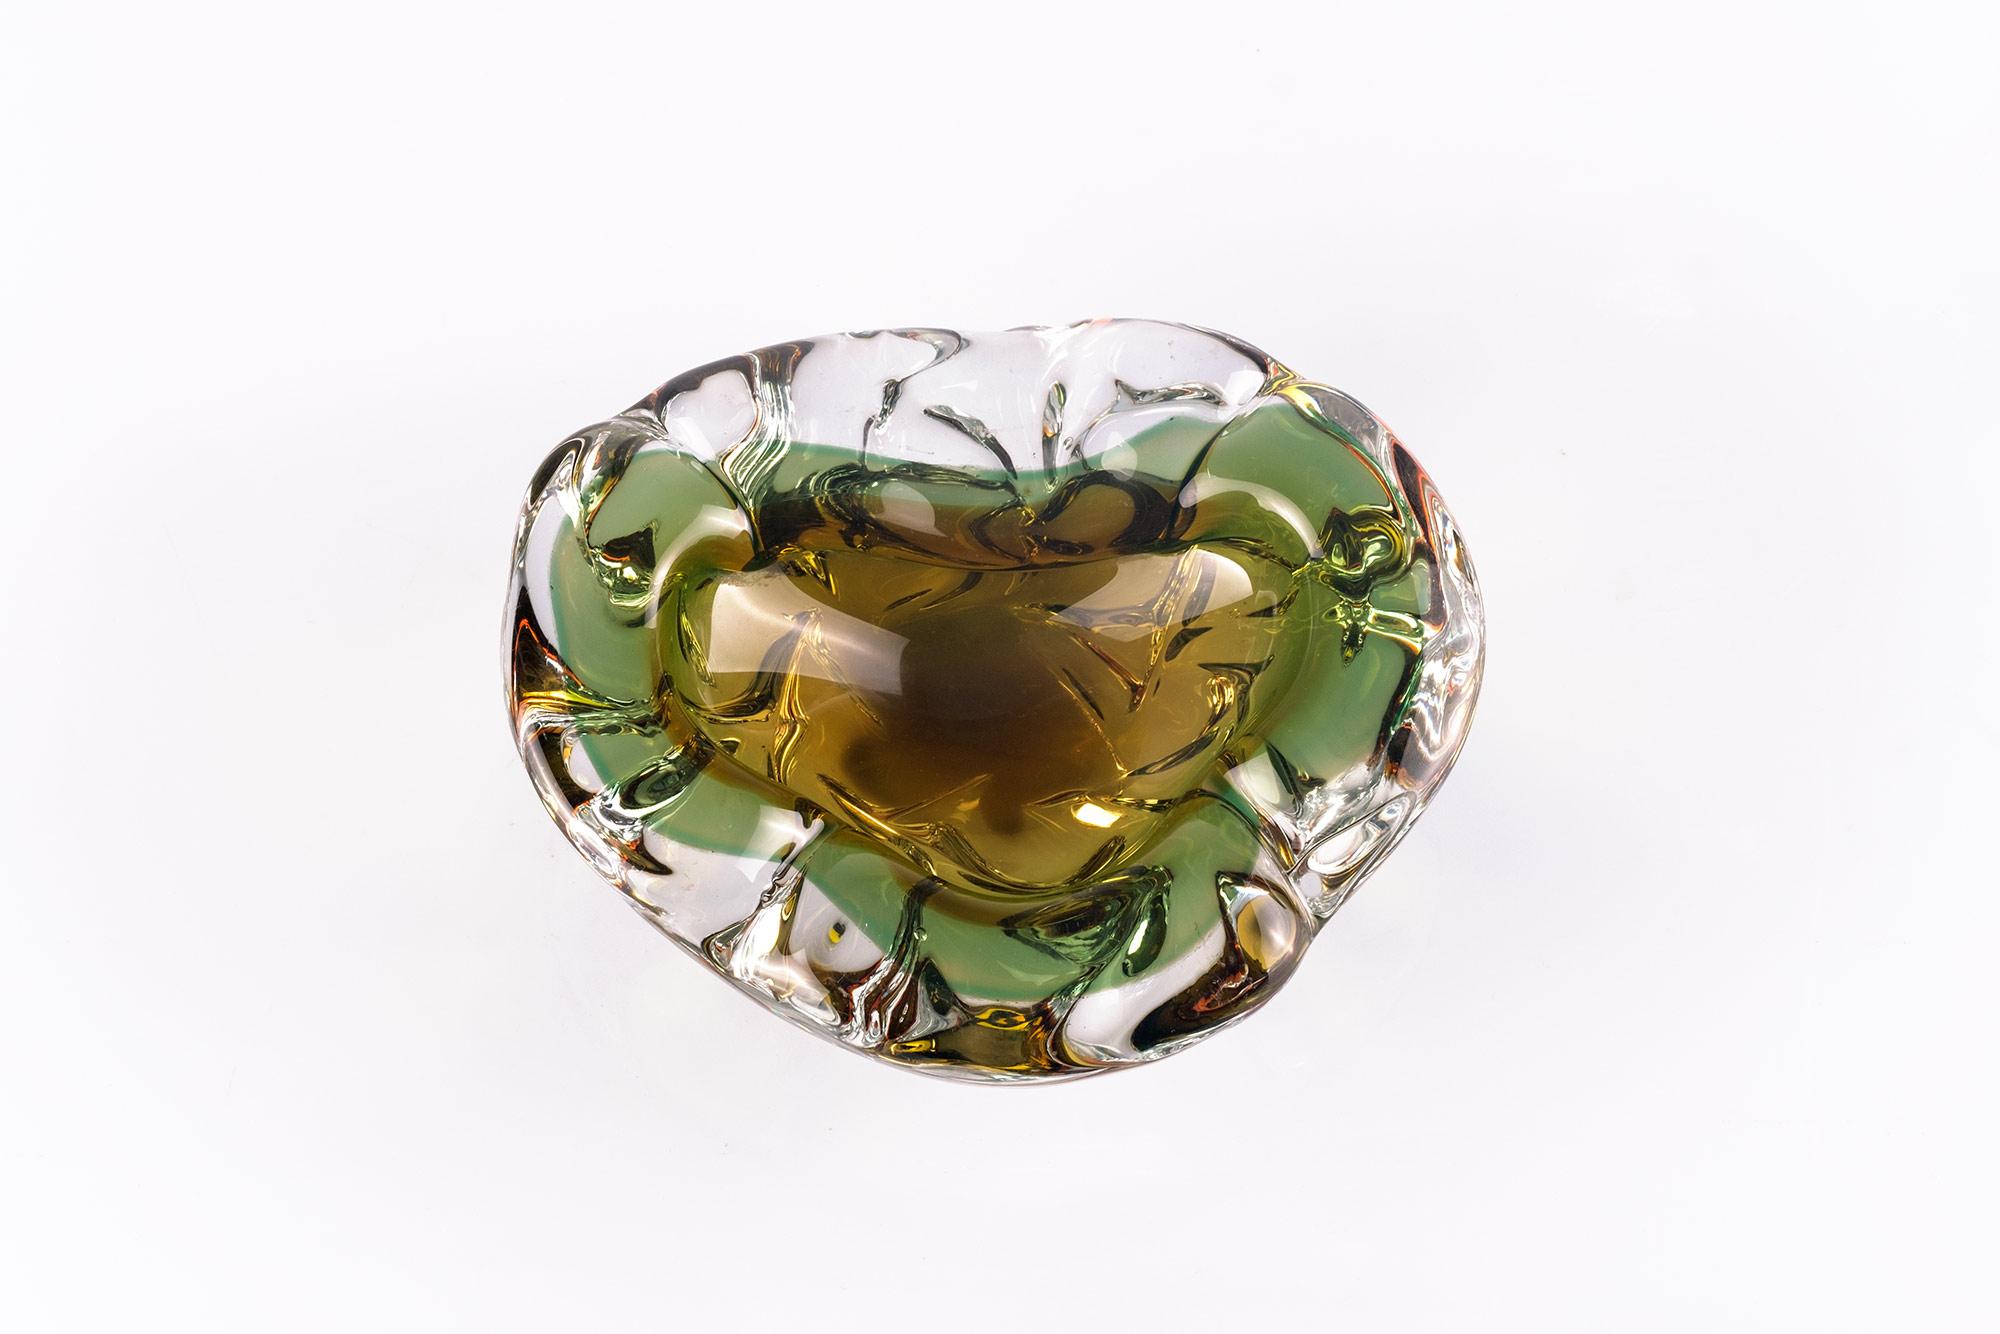 Splendid Sommerso Murano glass vide poche or bowl in fabulous colors.
 